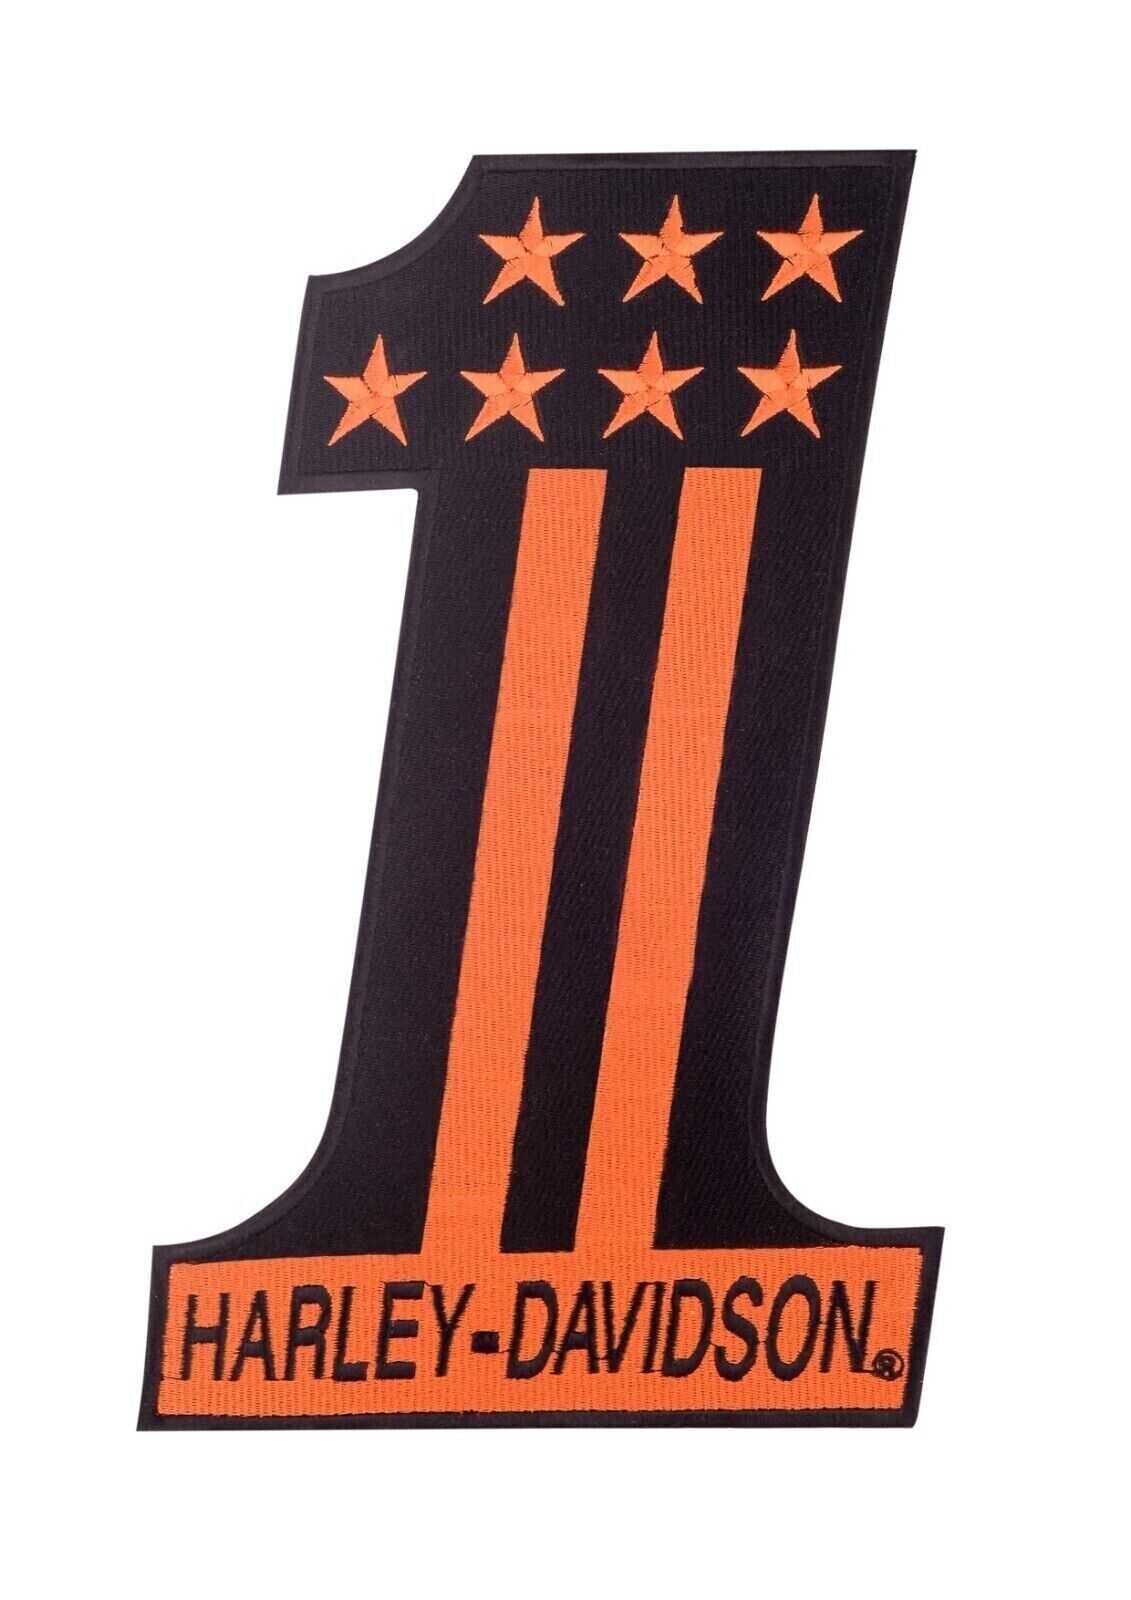 Harley Davidson Motorcycle Embroidery Patch - Harley Davidson #1 Large (orange)